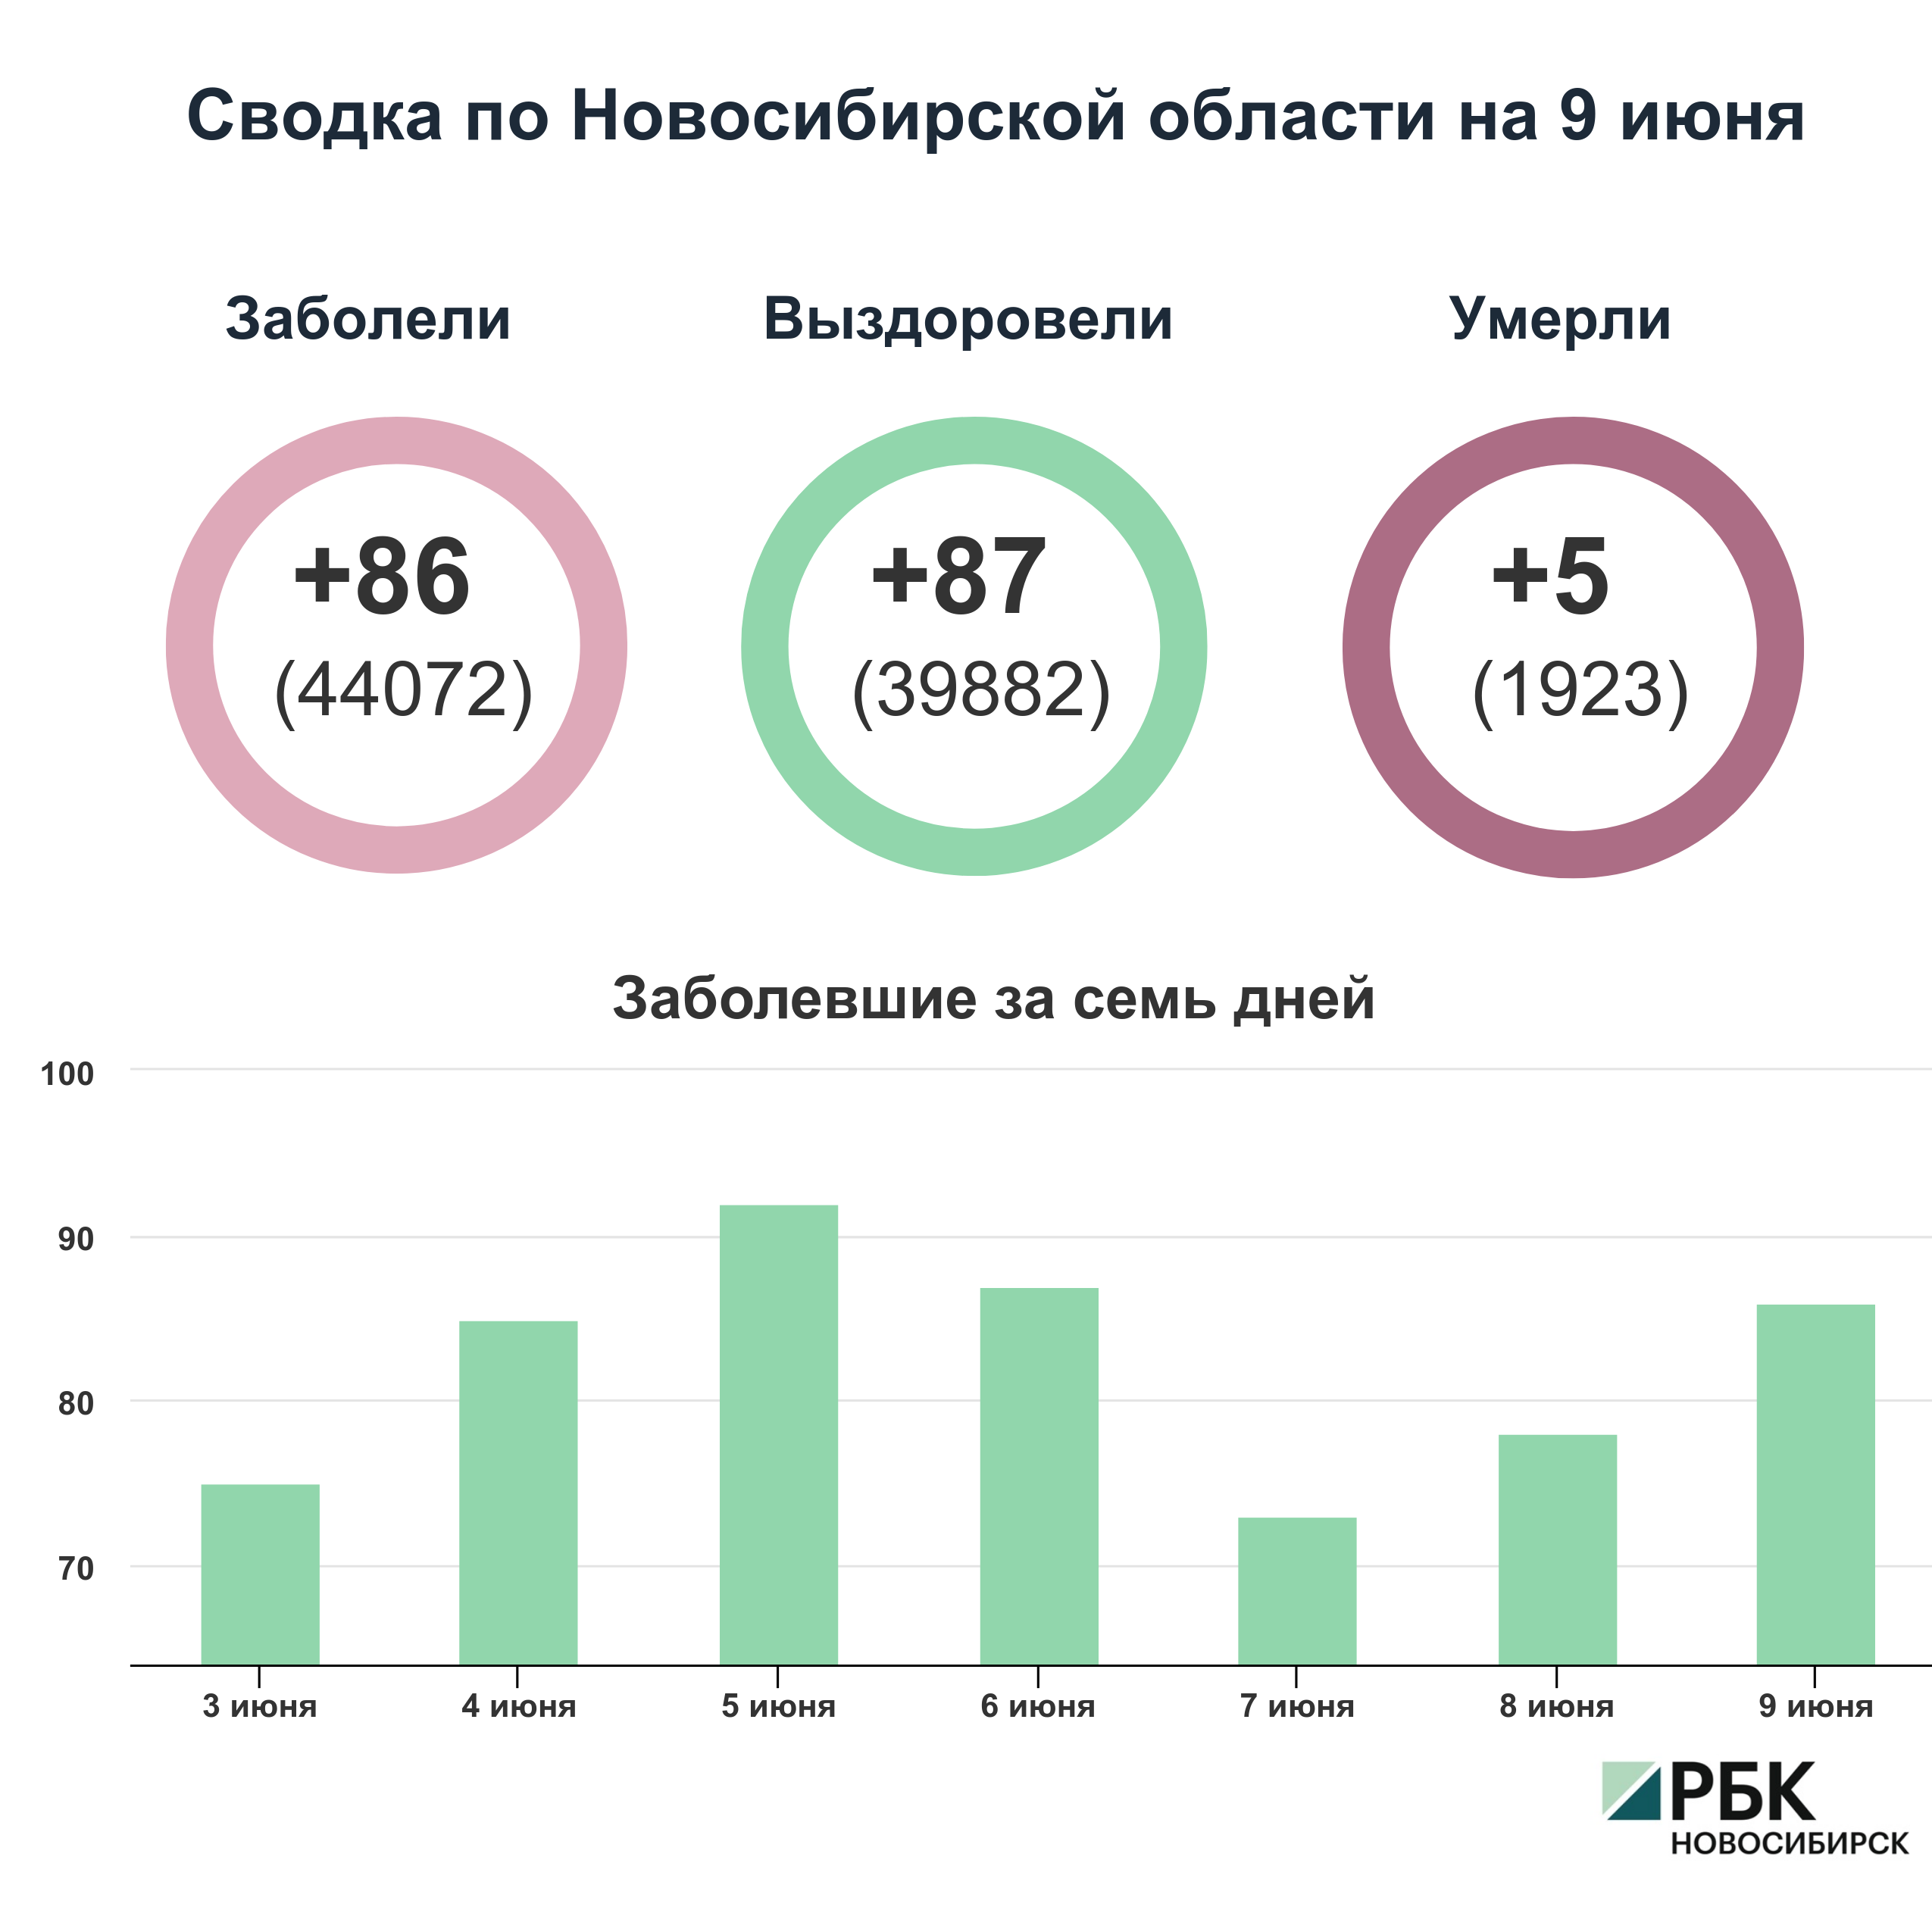 Коронавирус в Новосибирске: сводка на 9 июня